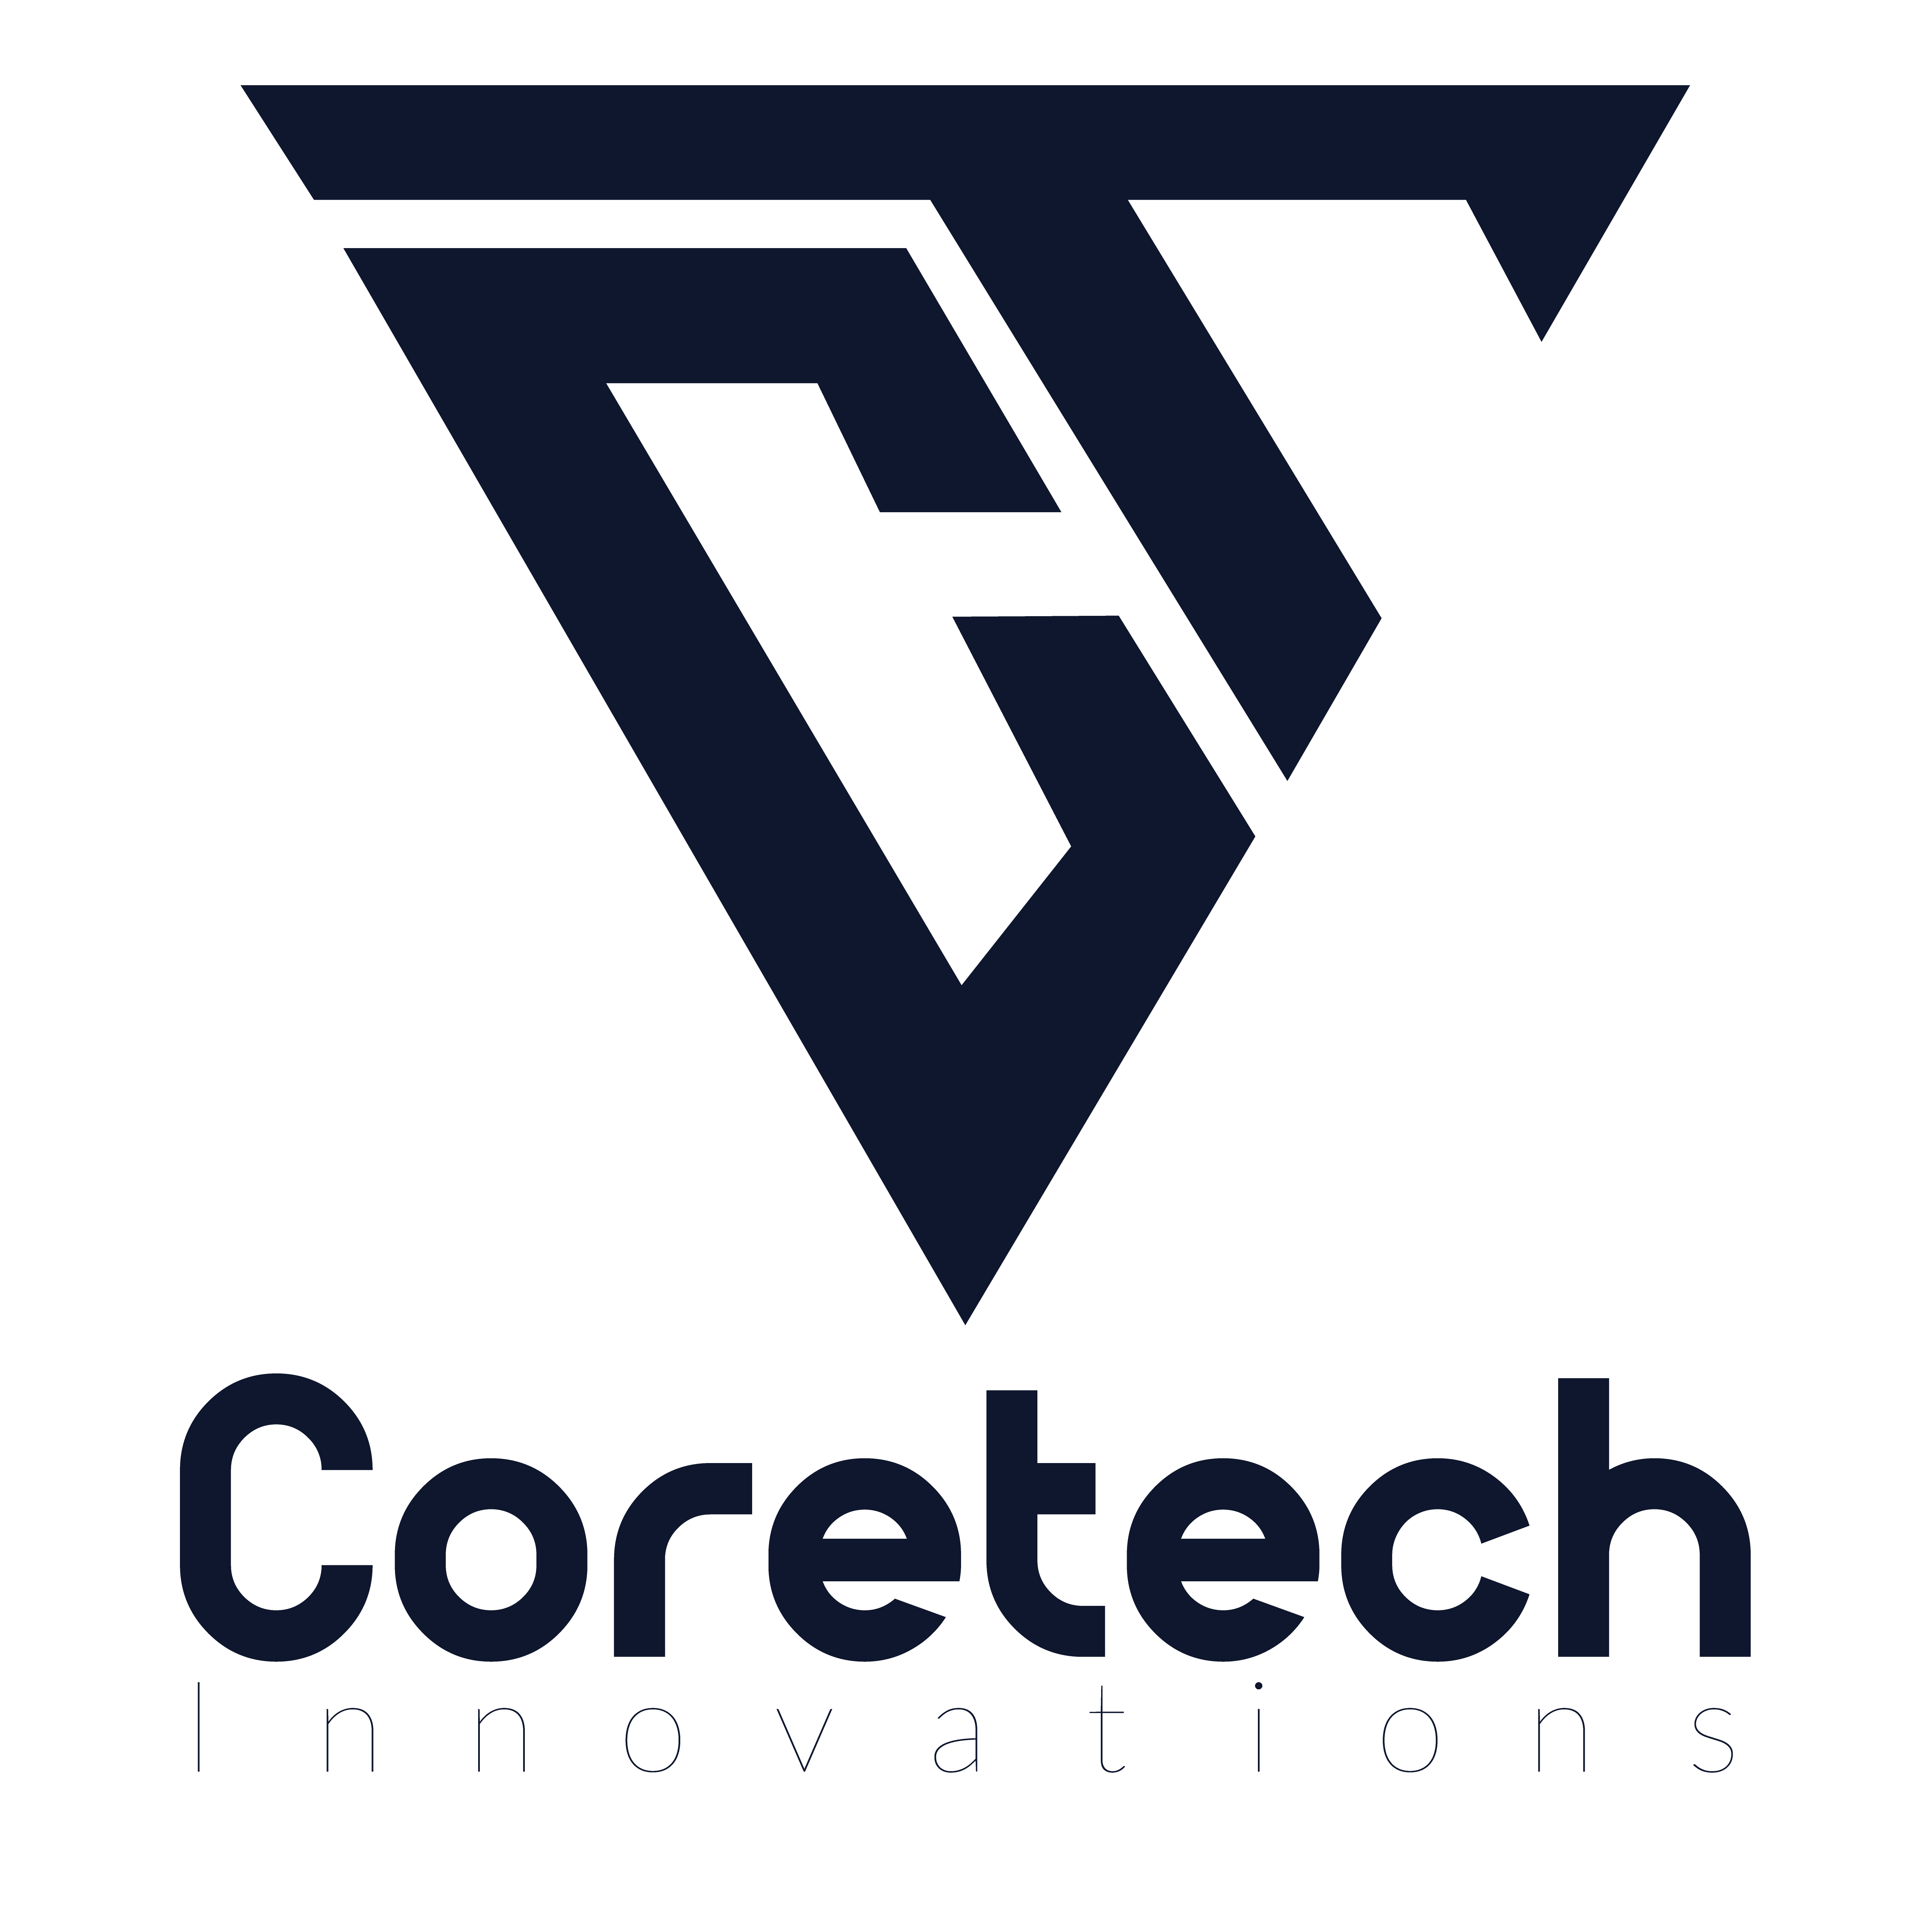 Coretech Innovations